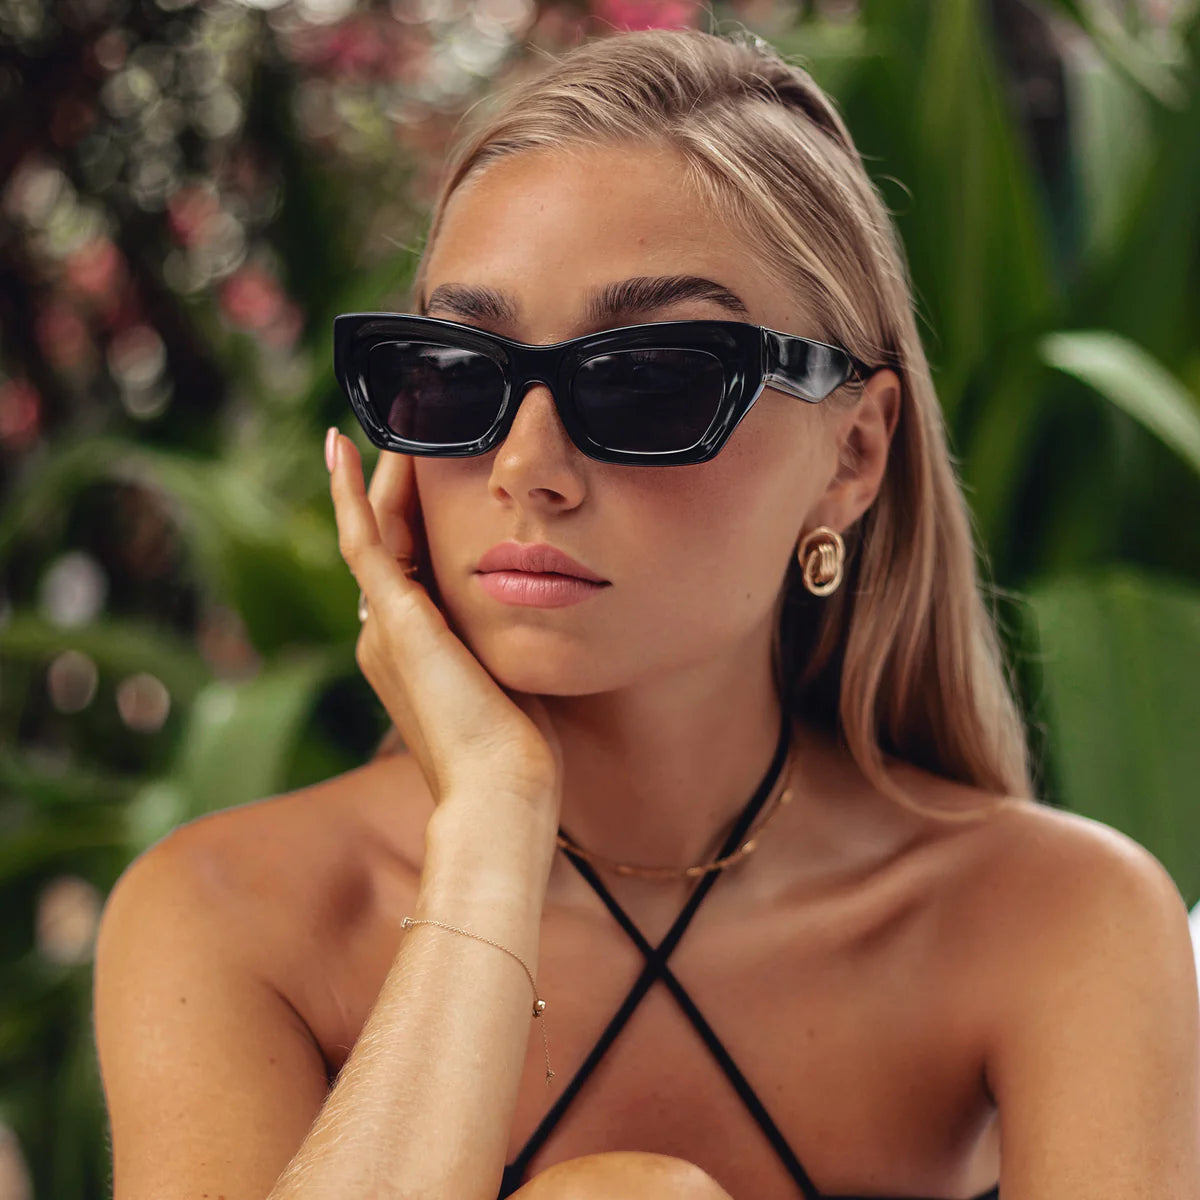 Selina Black Sunglasses